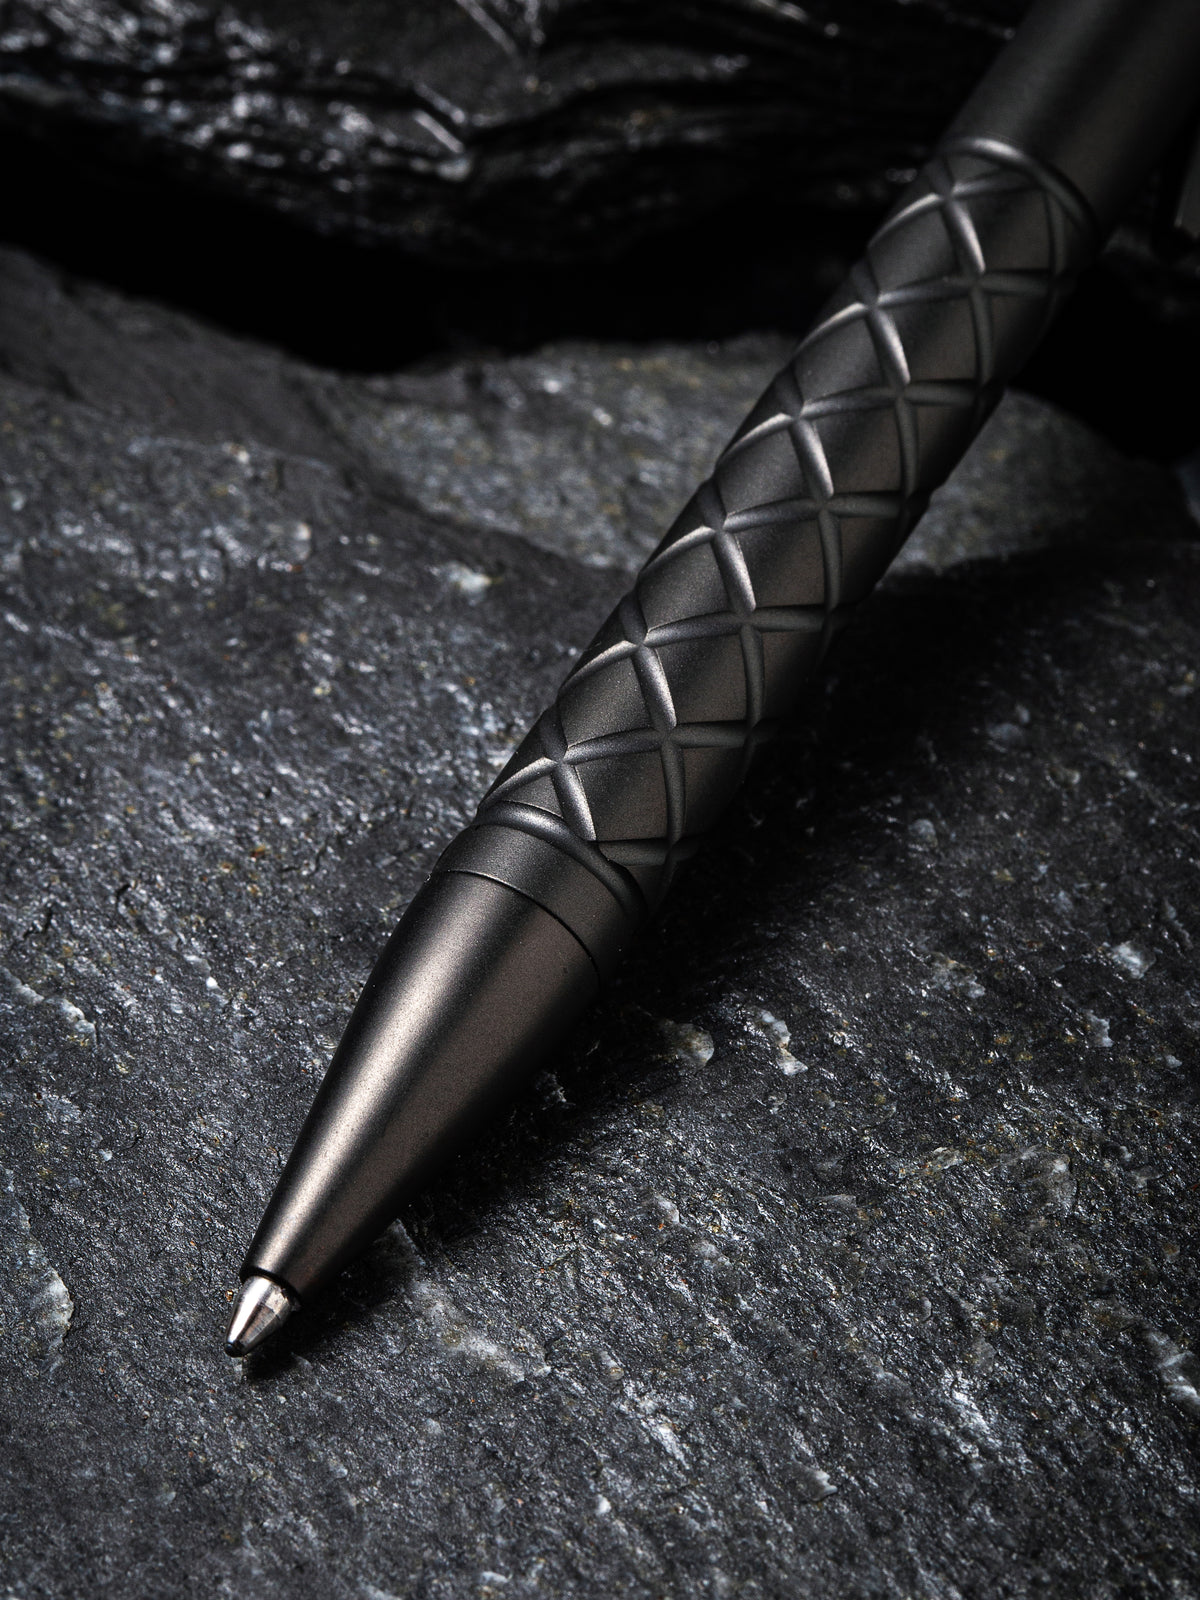 CIVIVI Coronet | Black Titanium Pen w/ a Spinner Bearing on Top